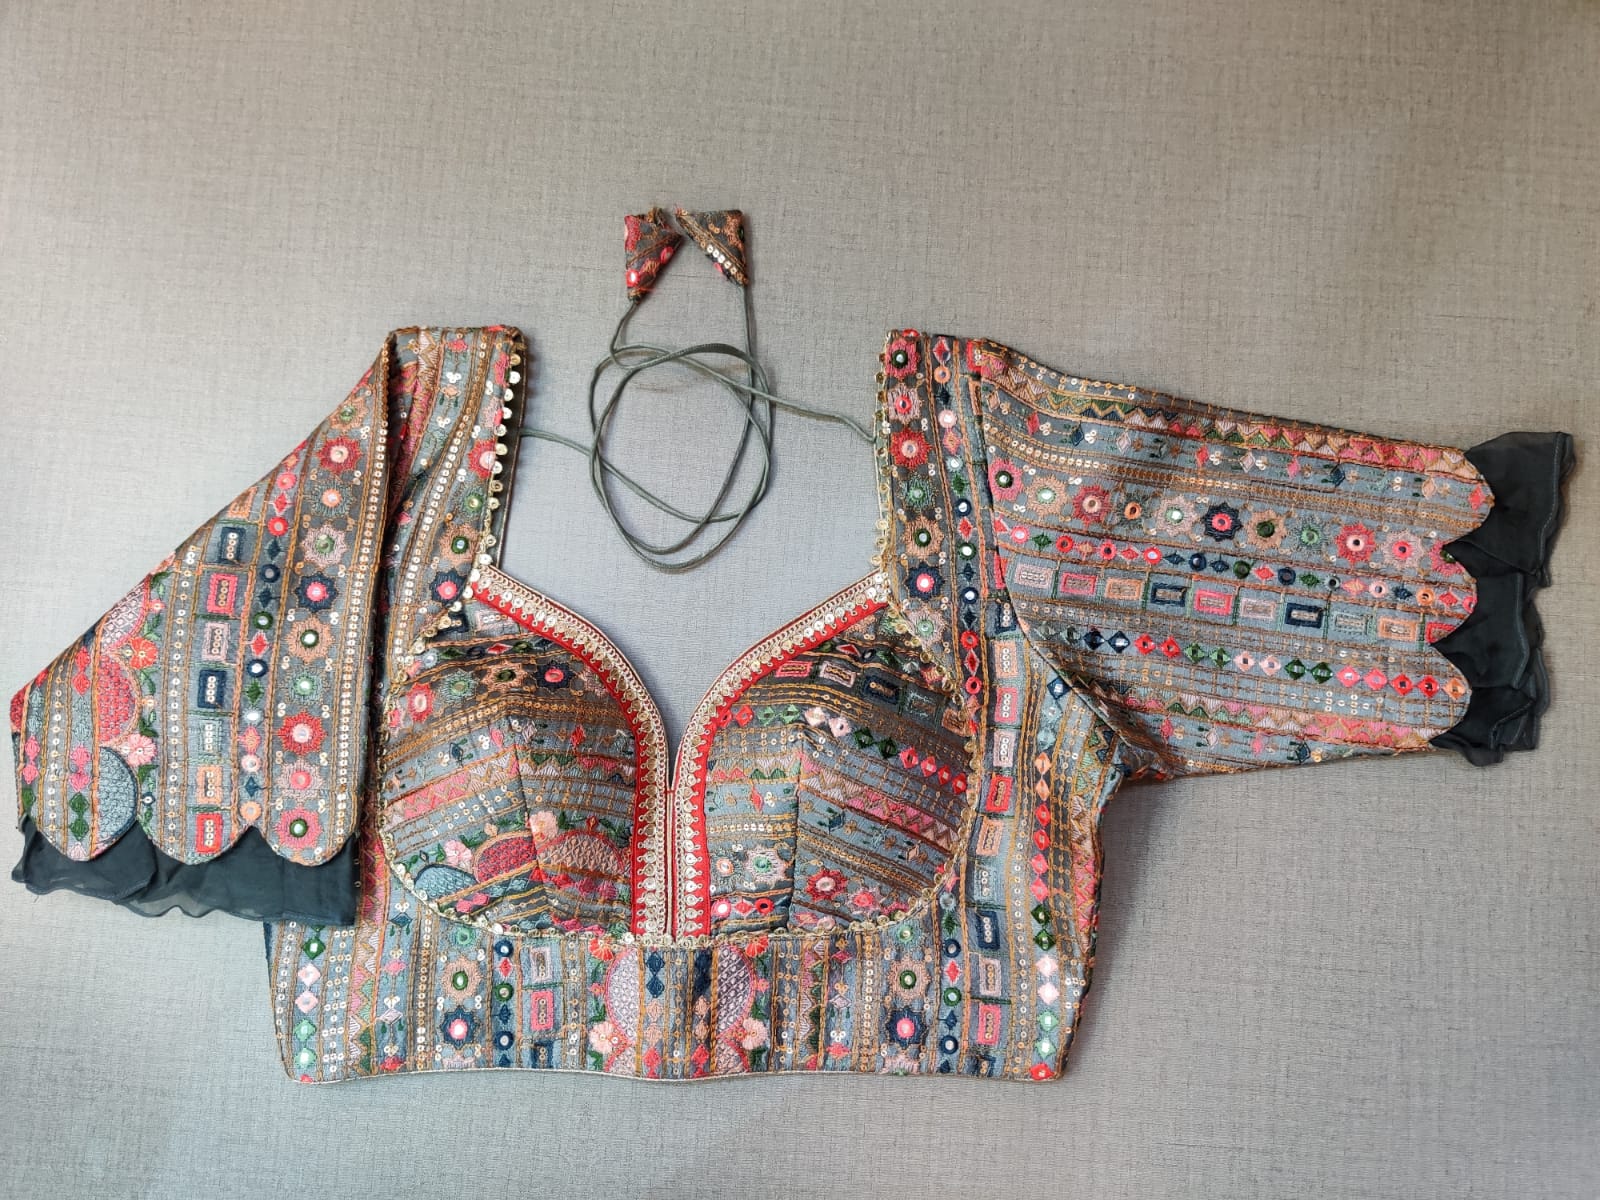 Thread Embroidery Blouse on Pinterest